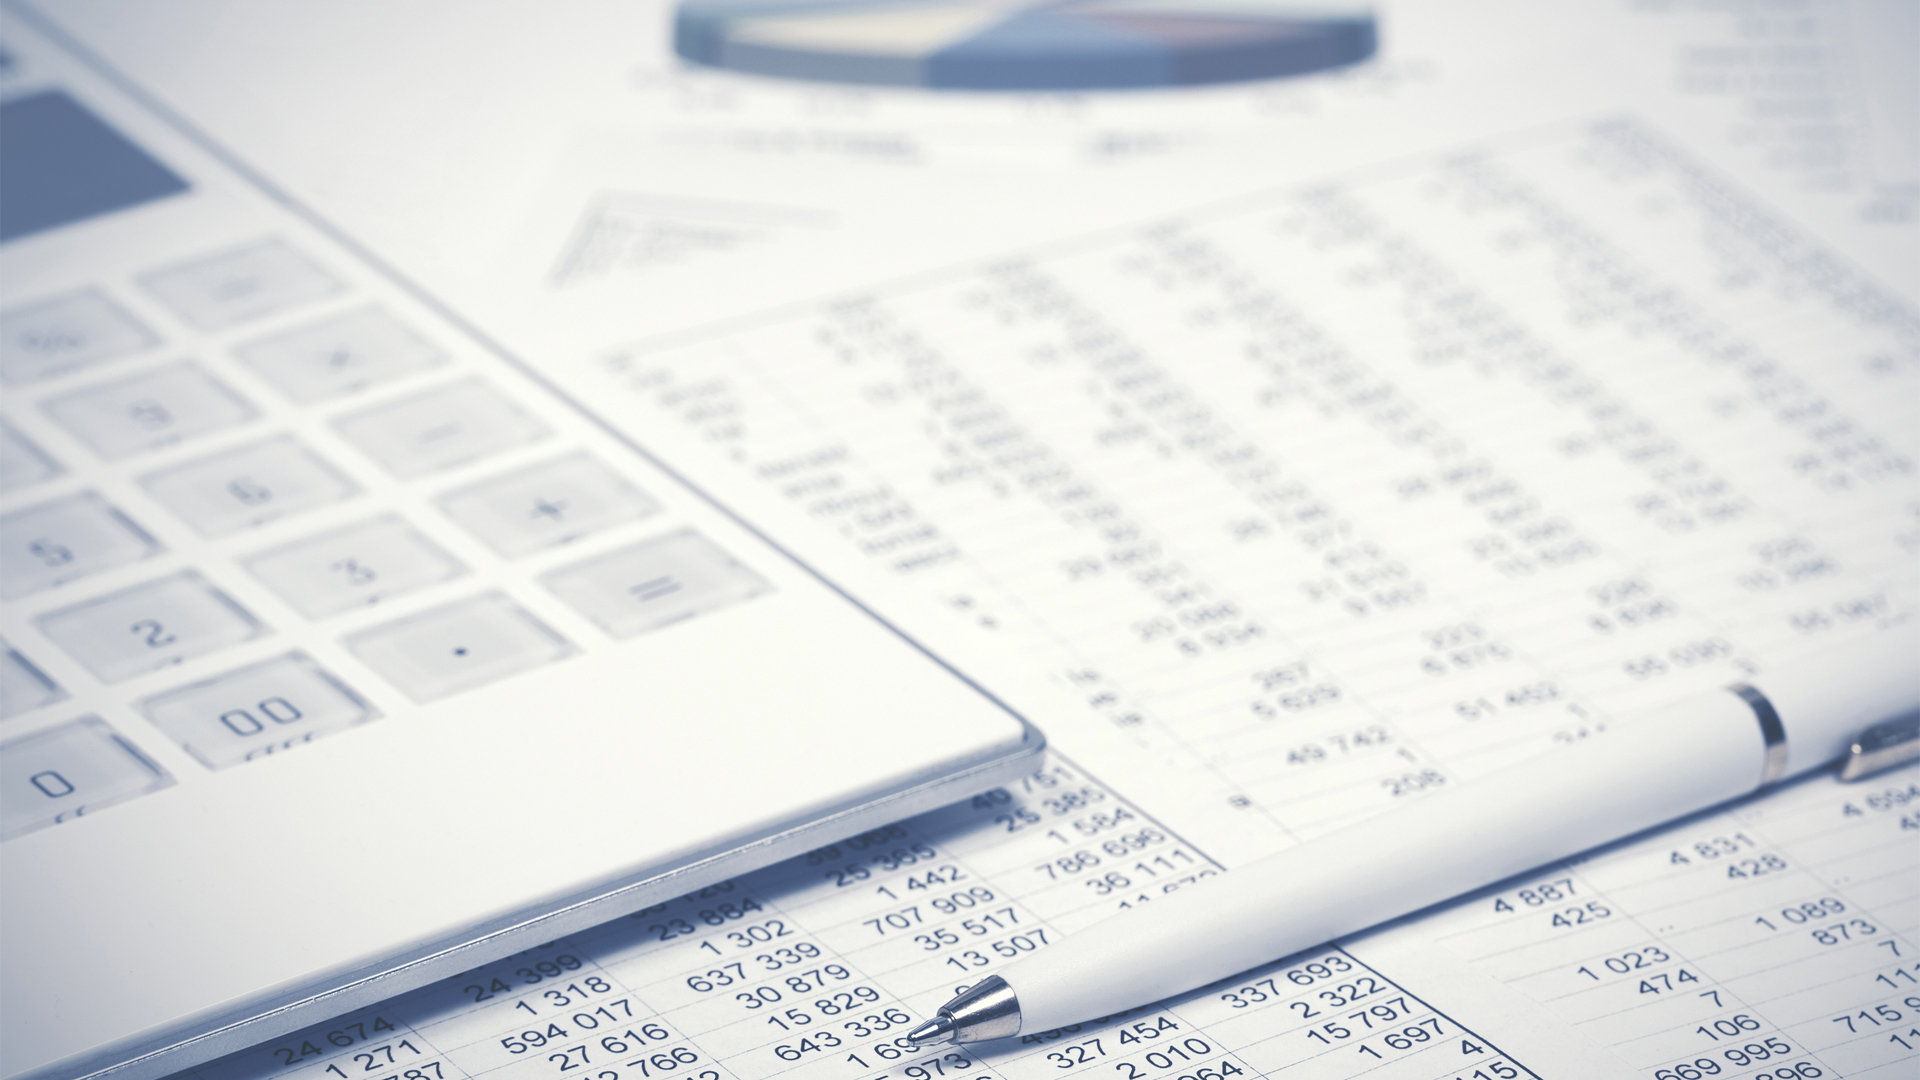 Financial accounting pen and calculator on balance sheets Image